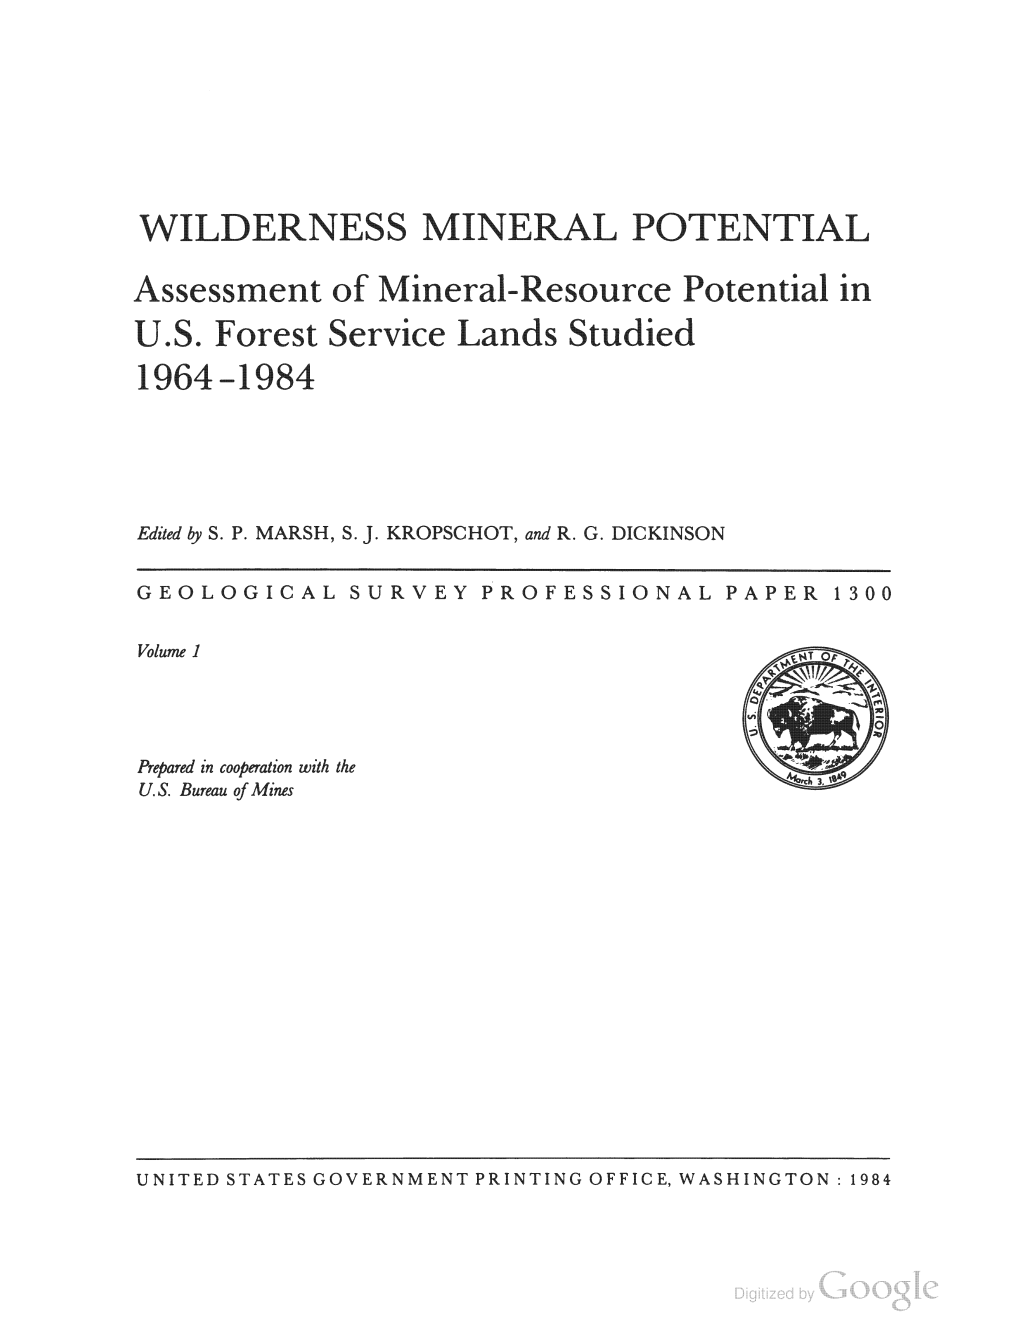 U.S. Geological Survey Professional Paper 820,722 P